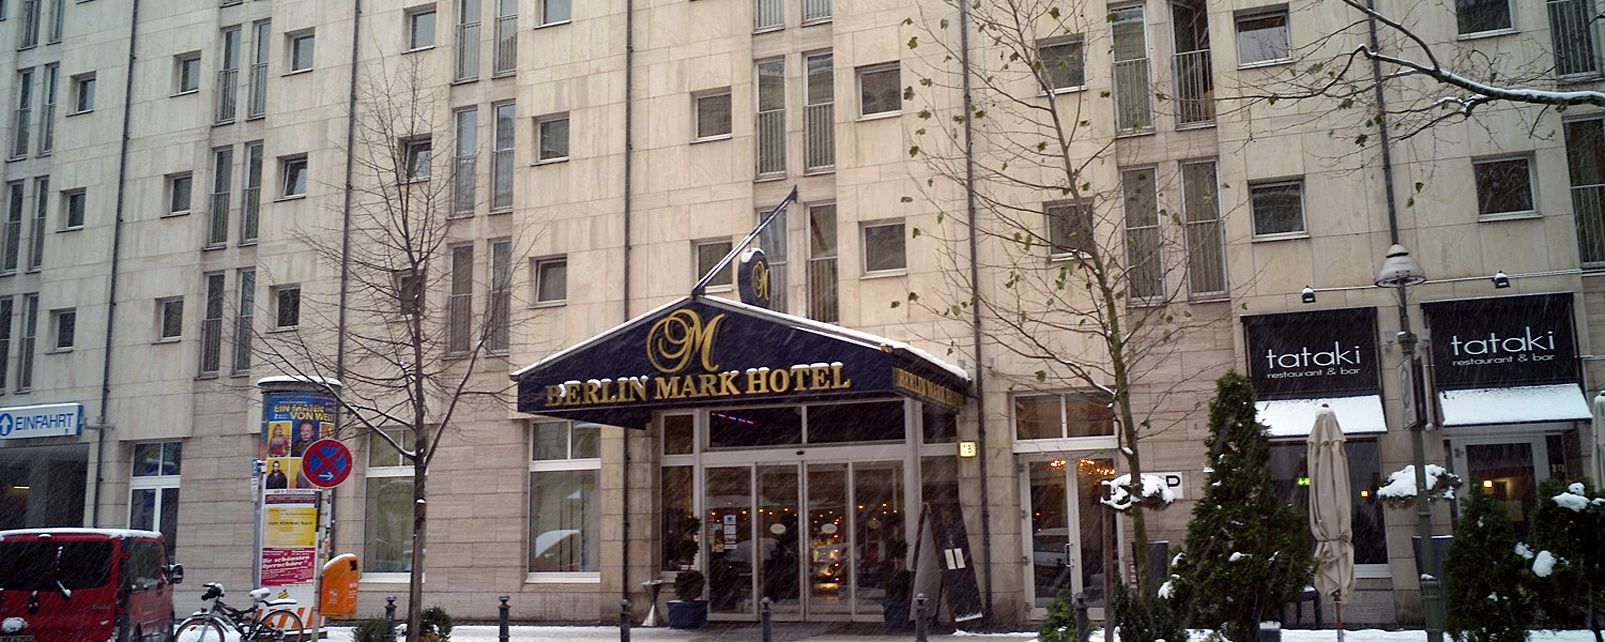 Hotel Berlin Mark Hotel